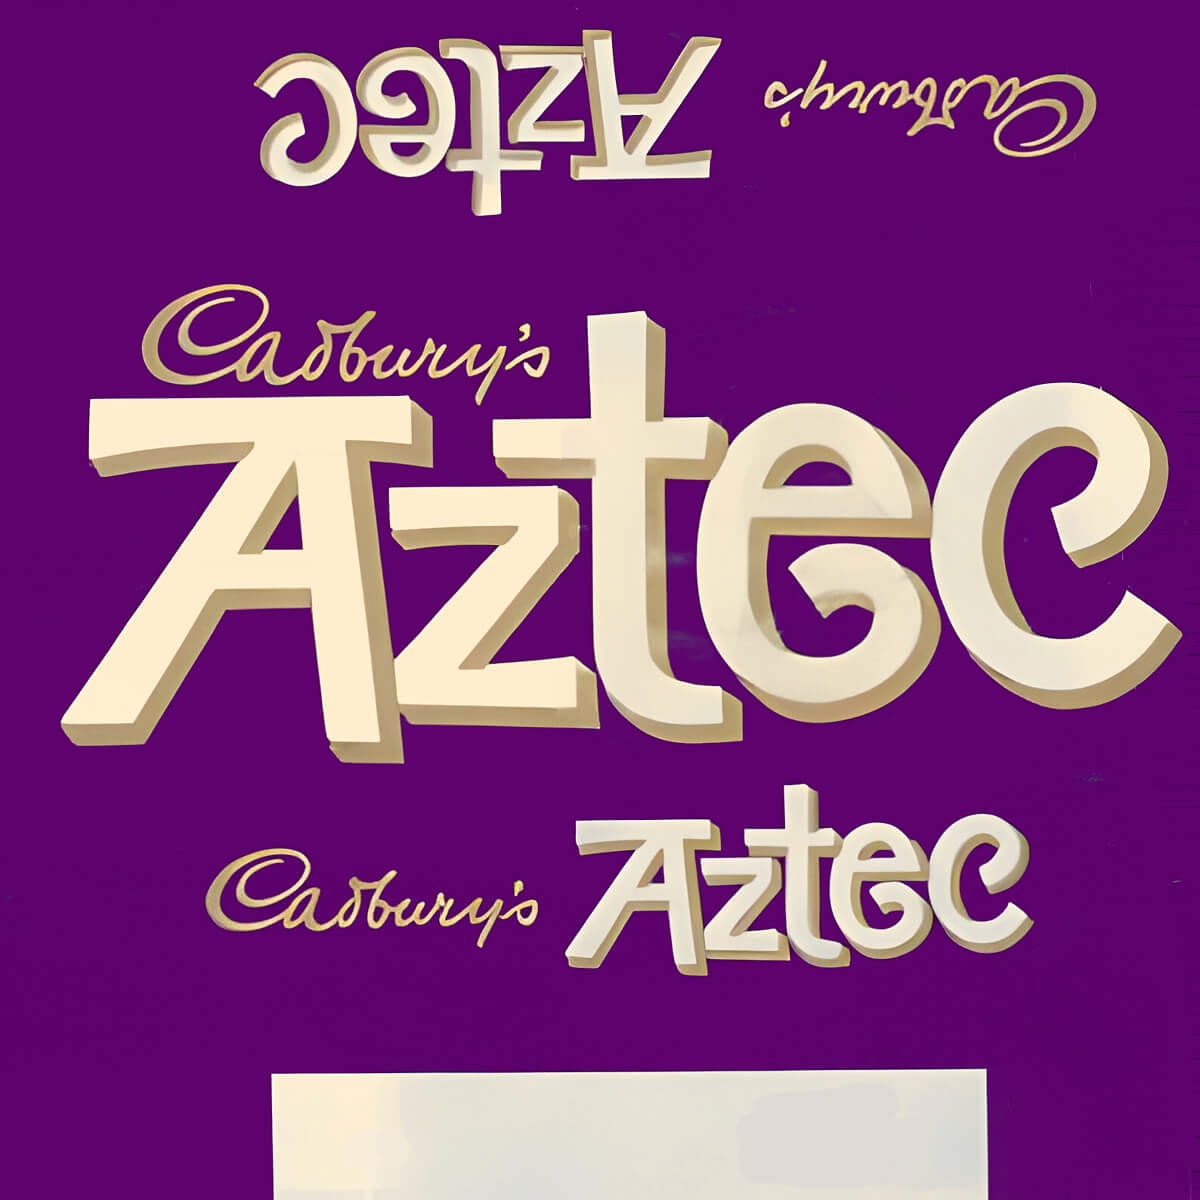 What Really Happened to Cadbury's Aztec?